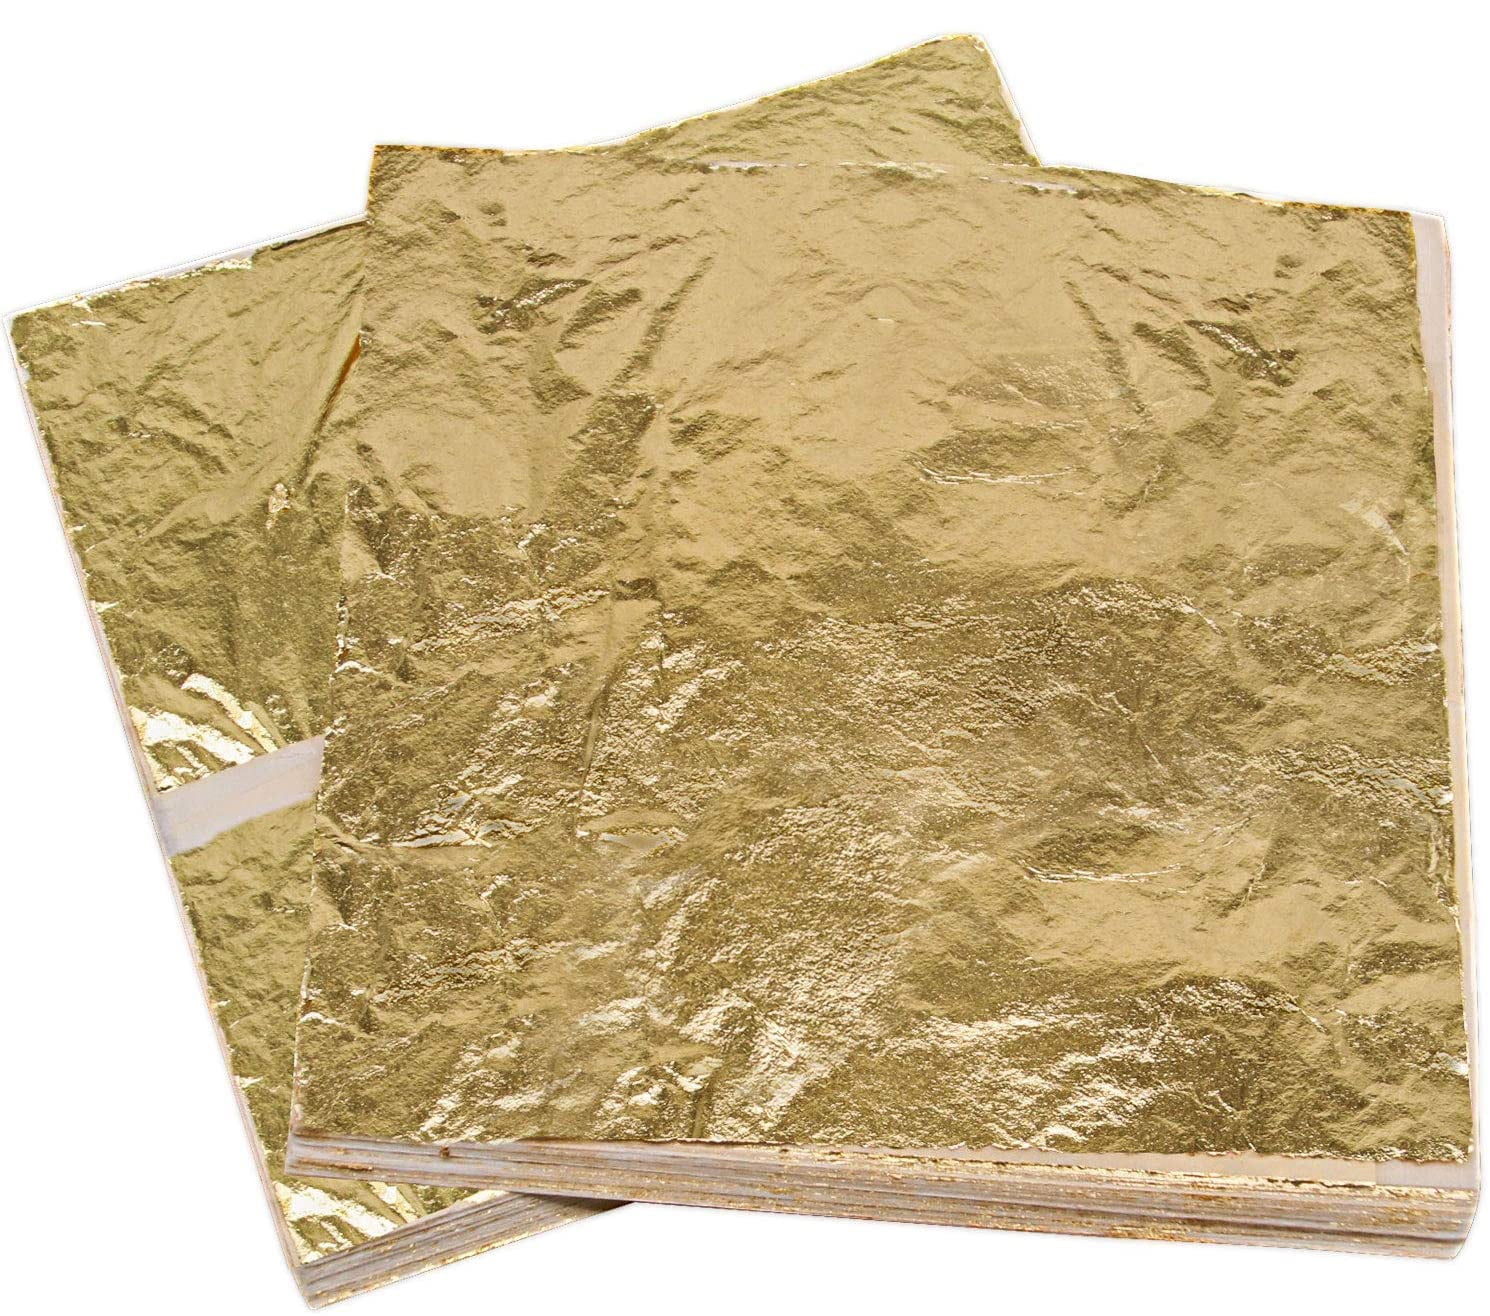 Operitacx 200 Pcs Imitation Gold Foil Paper Gold Foil Paper for Crafts  Paint Gold Leaf Gold Foil Paper for Art Foil Paper for Decor Leaf Foil  Paper